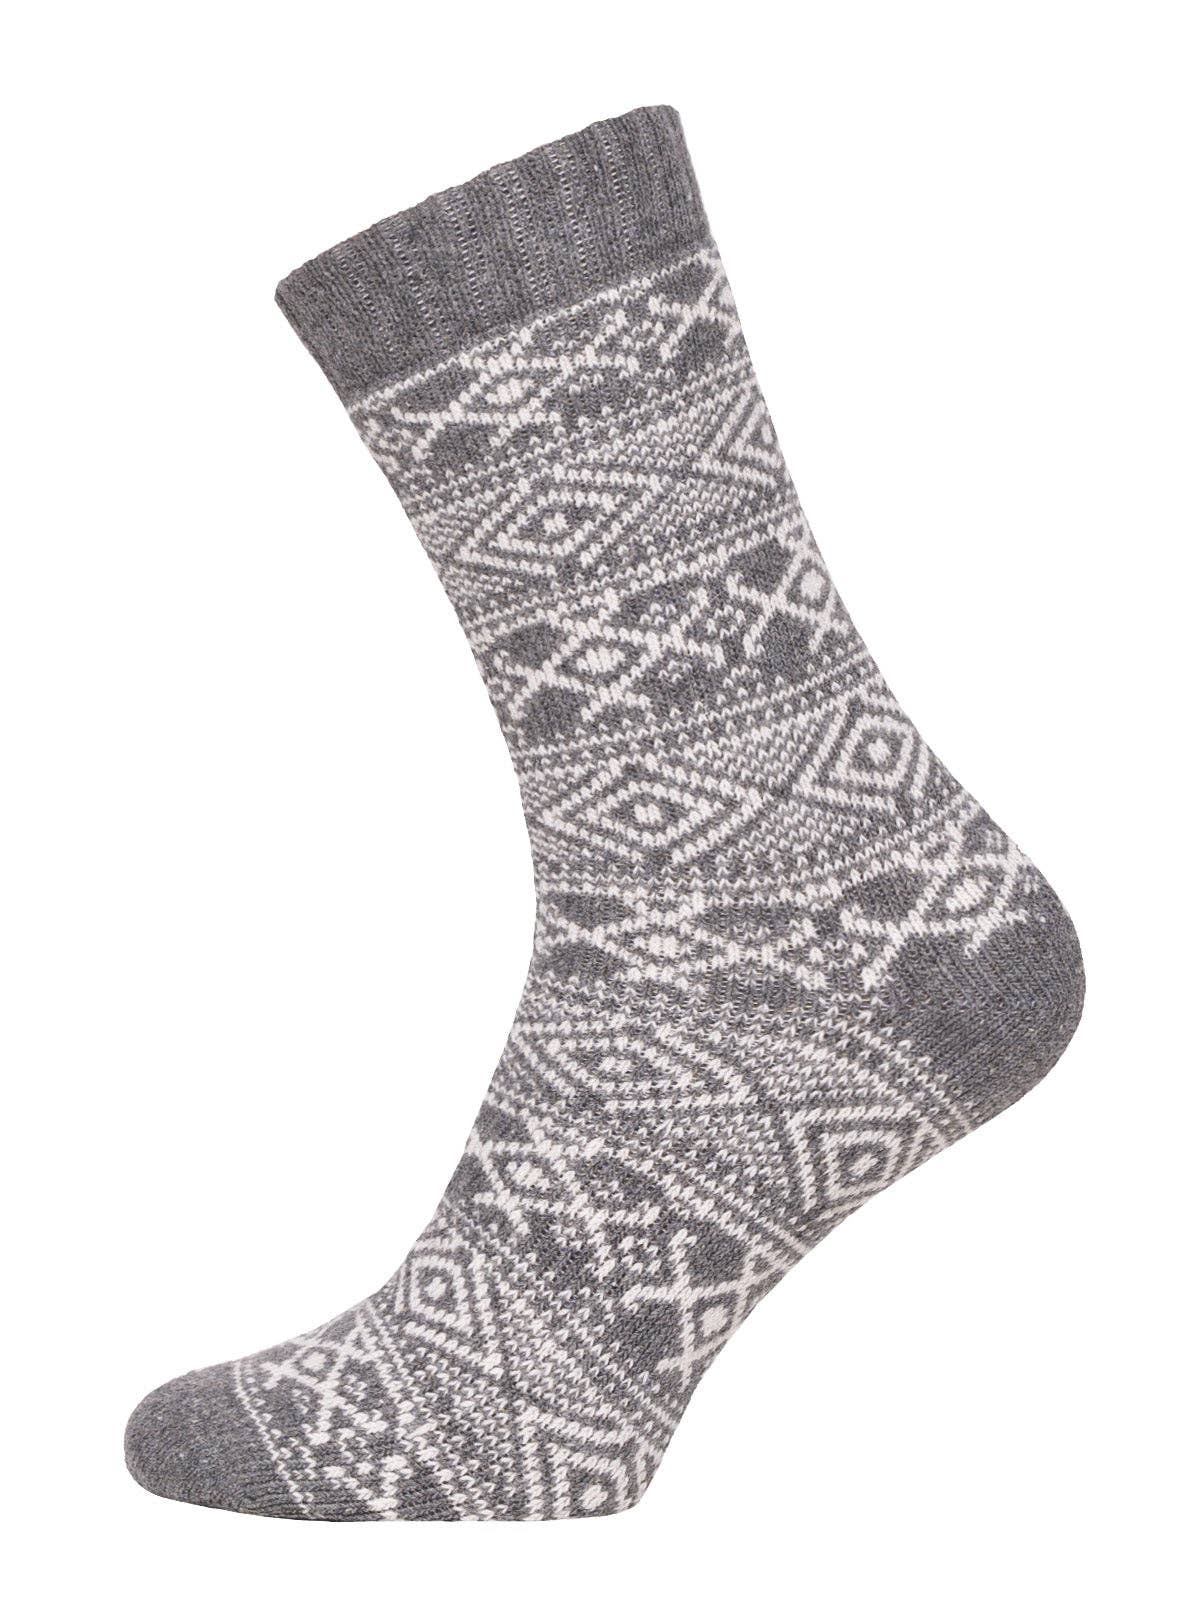 Socks: Norwegian grey socks classic 45% wool content